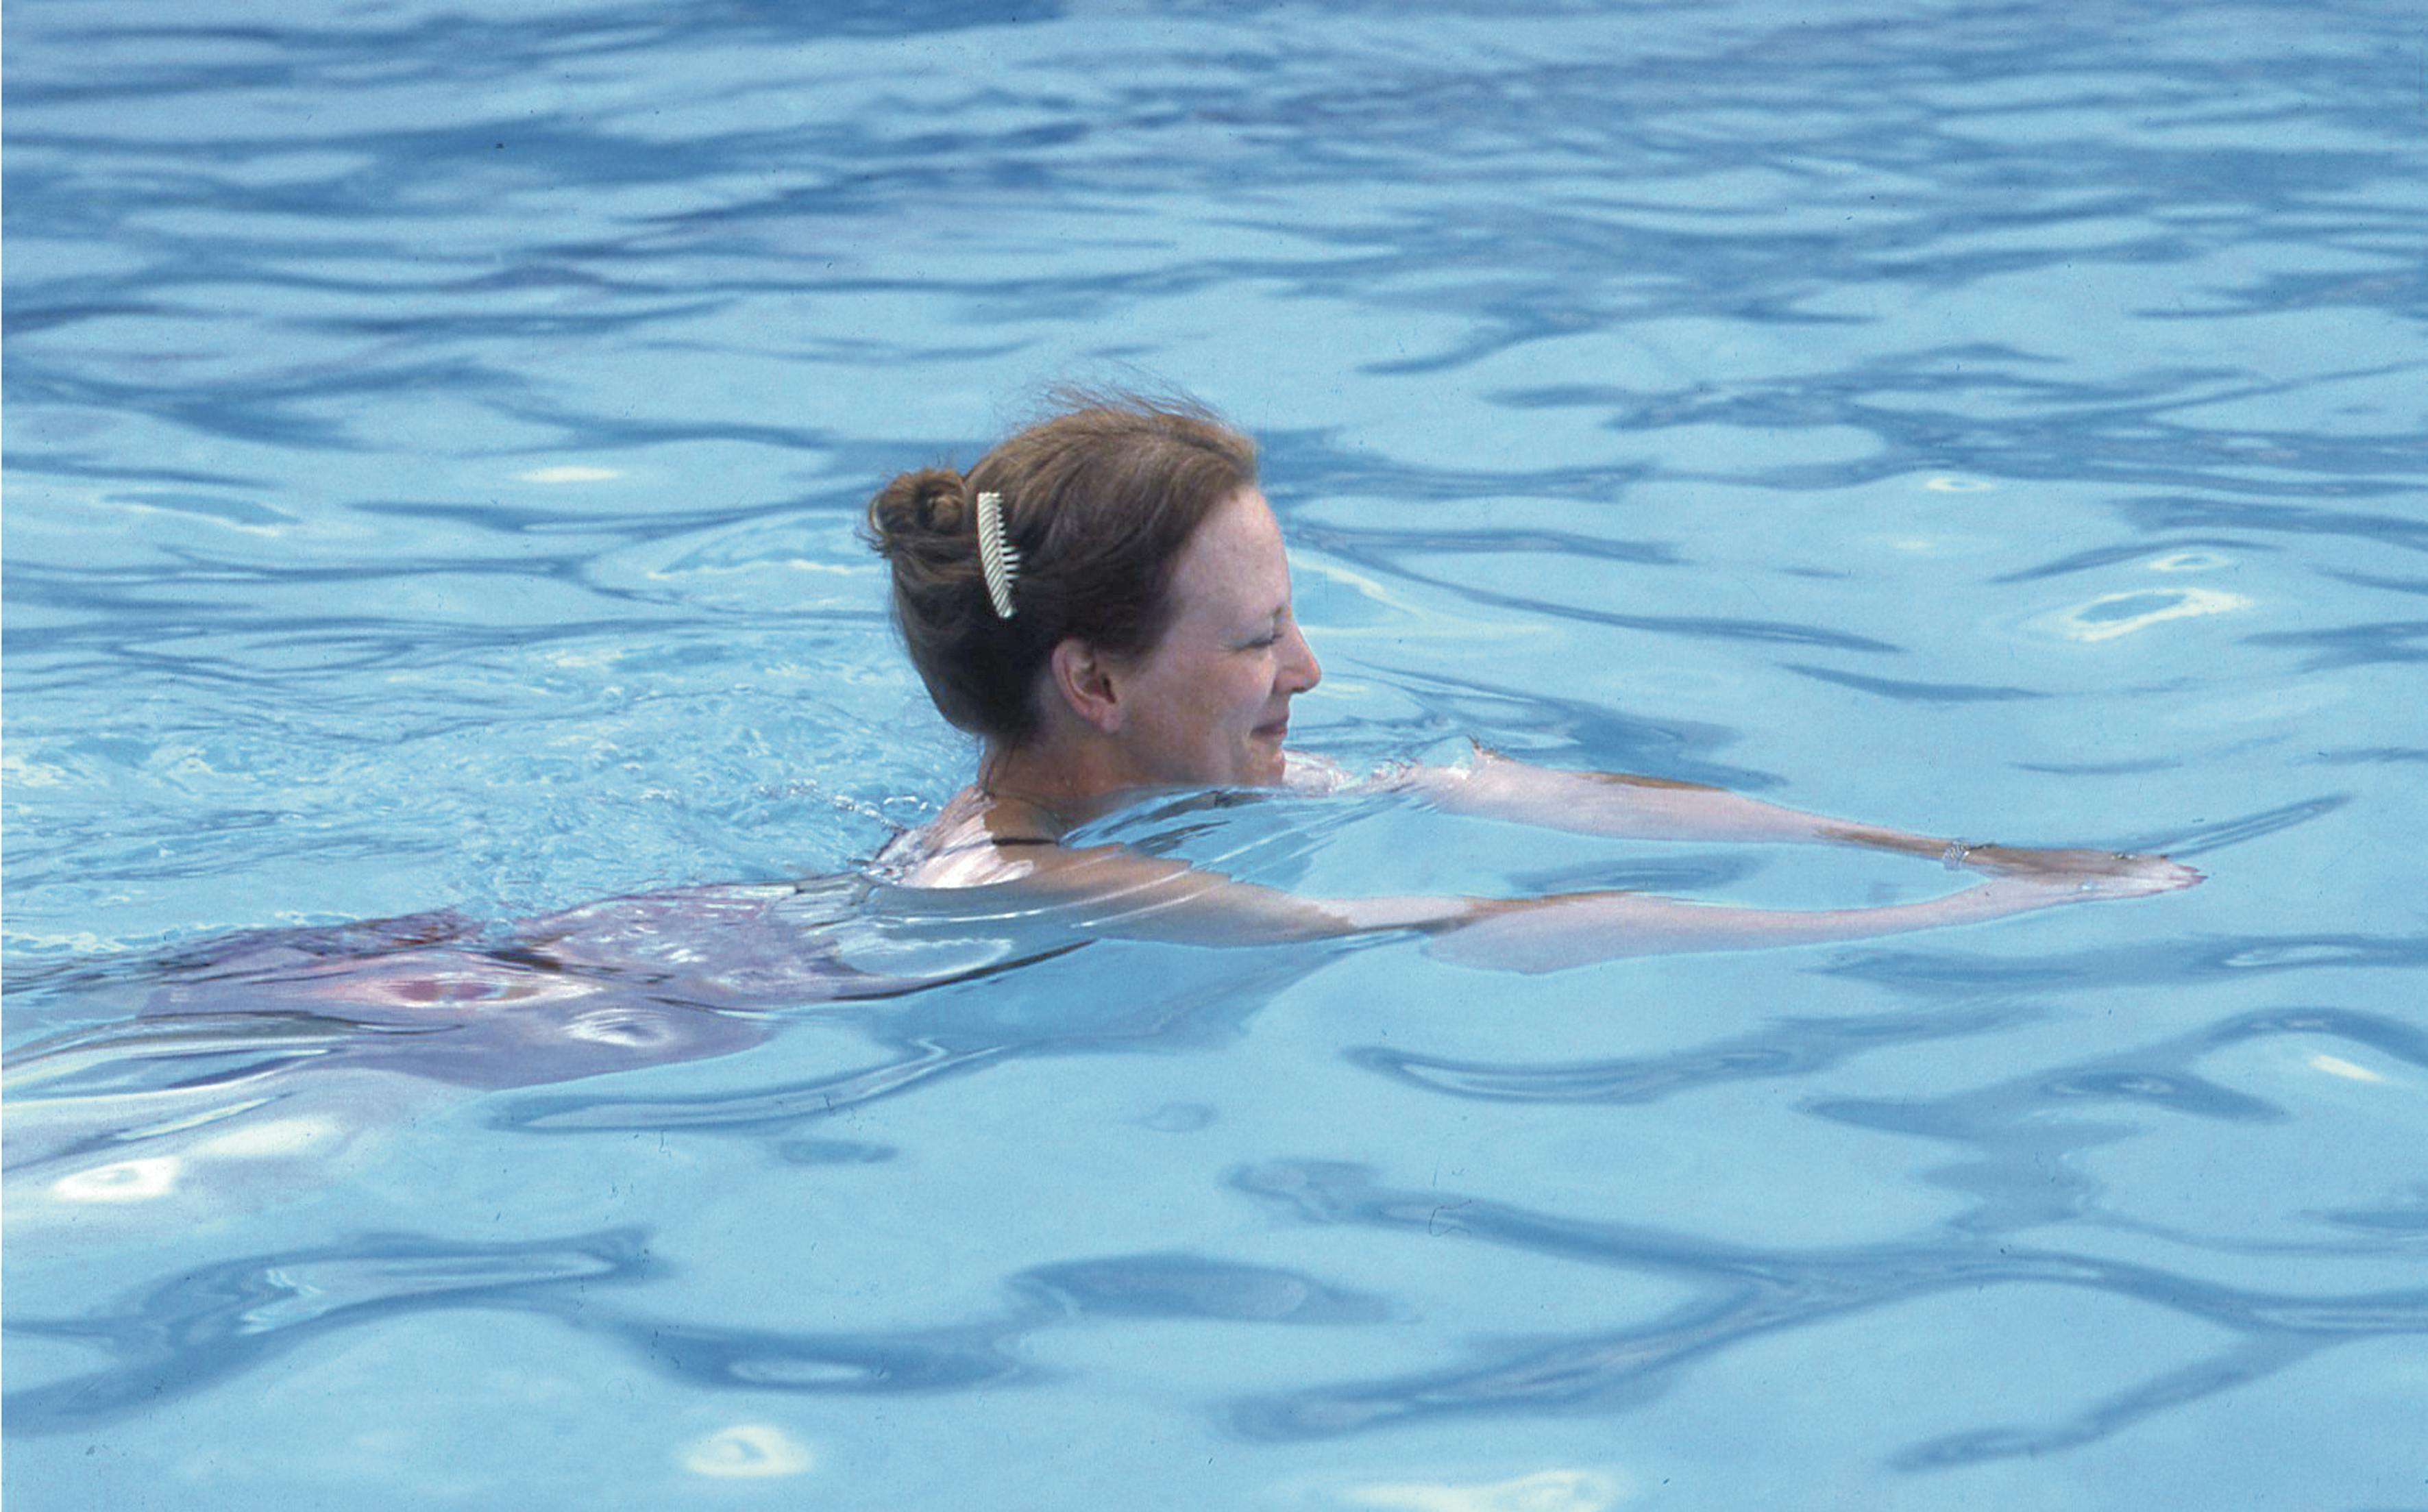 Dronning Margrethe svømmer en tur i poolen